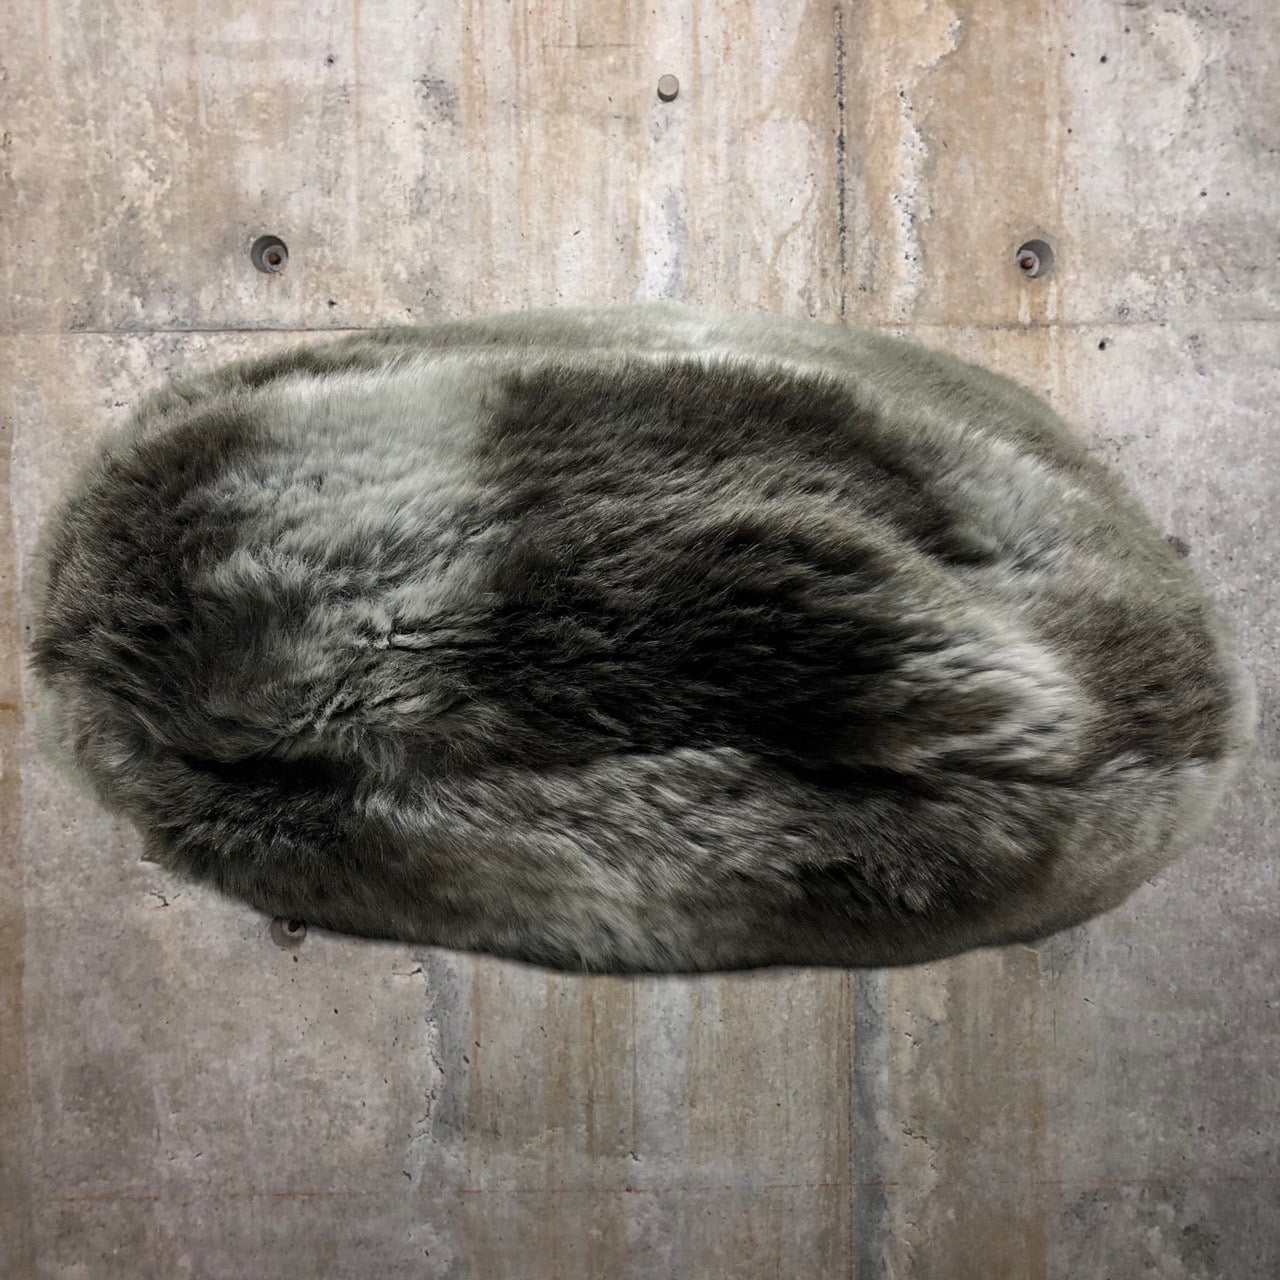 Vivienne Westwood(ヴィヴィアンウエストウッド) orb charm eco fur  bag/オーブチャームエコファーバッグ/トートバッグ グレー